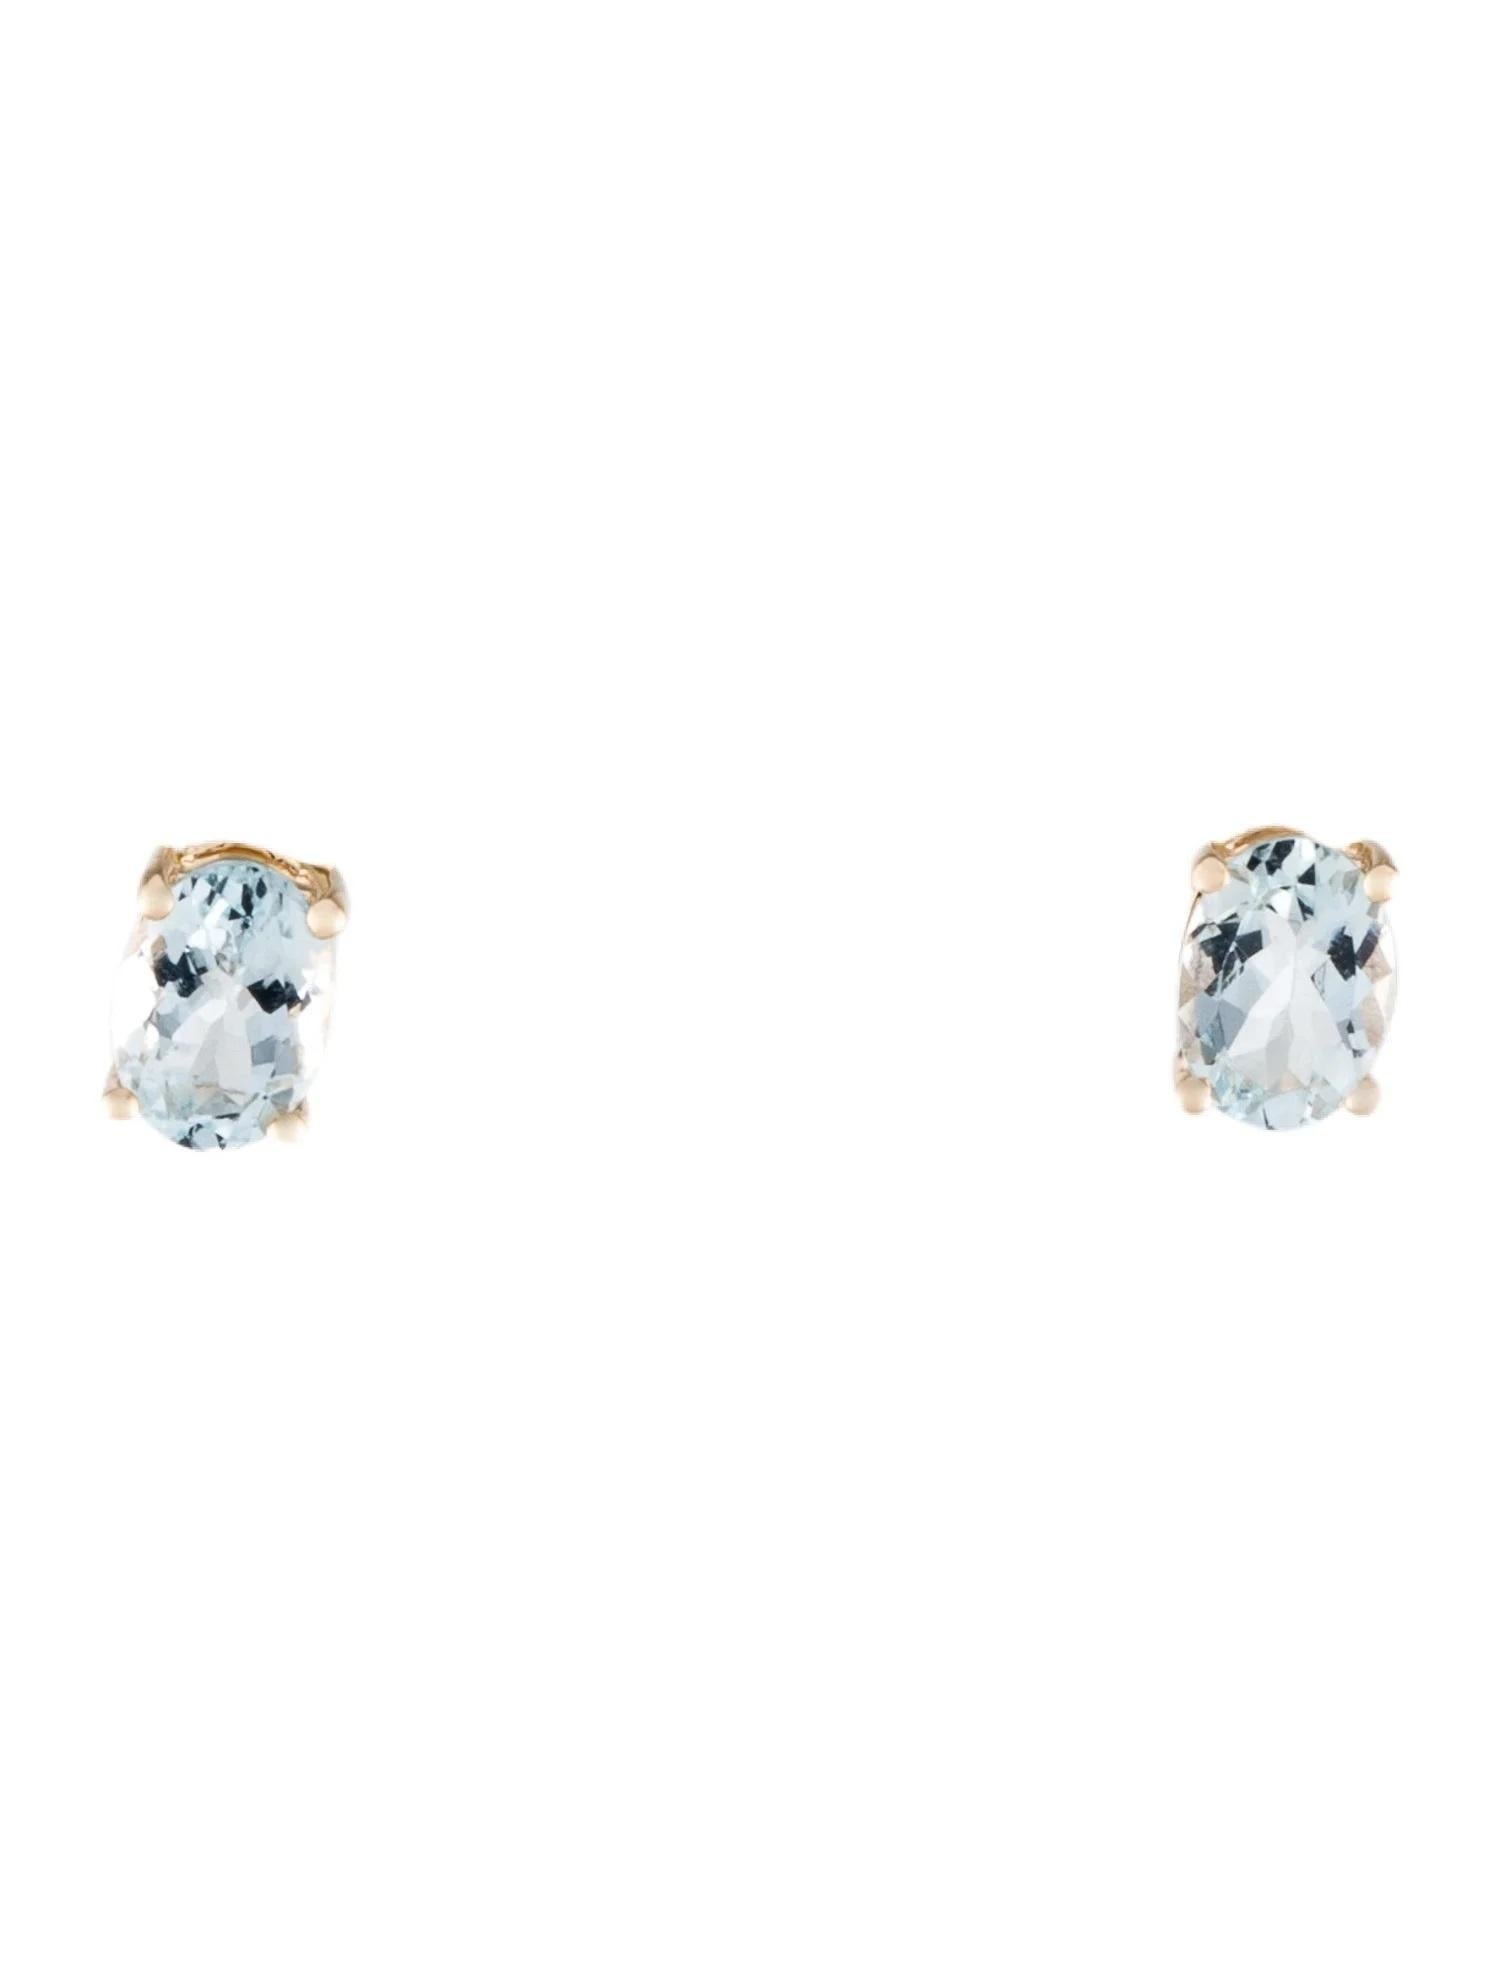 Oval Cut 14K Aquamarine Stud Earrings  1.40 Carat Oval Modified Brilliant Gemstones For Sale